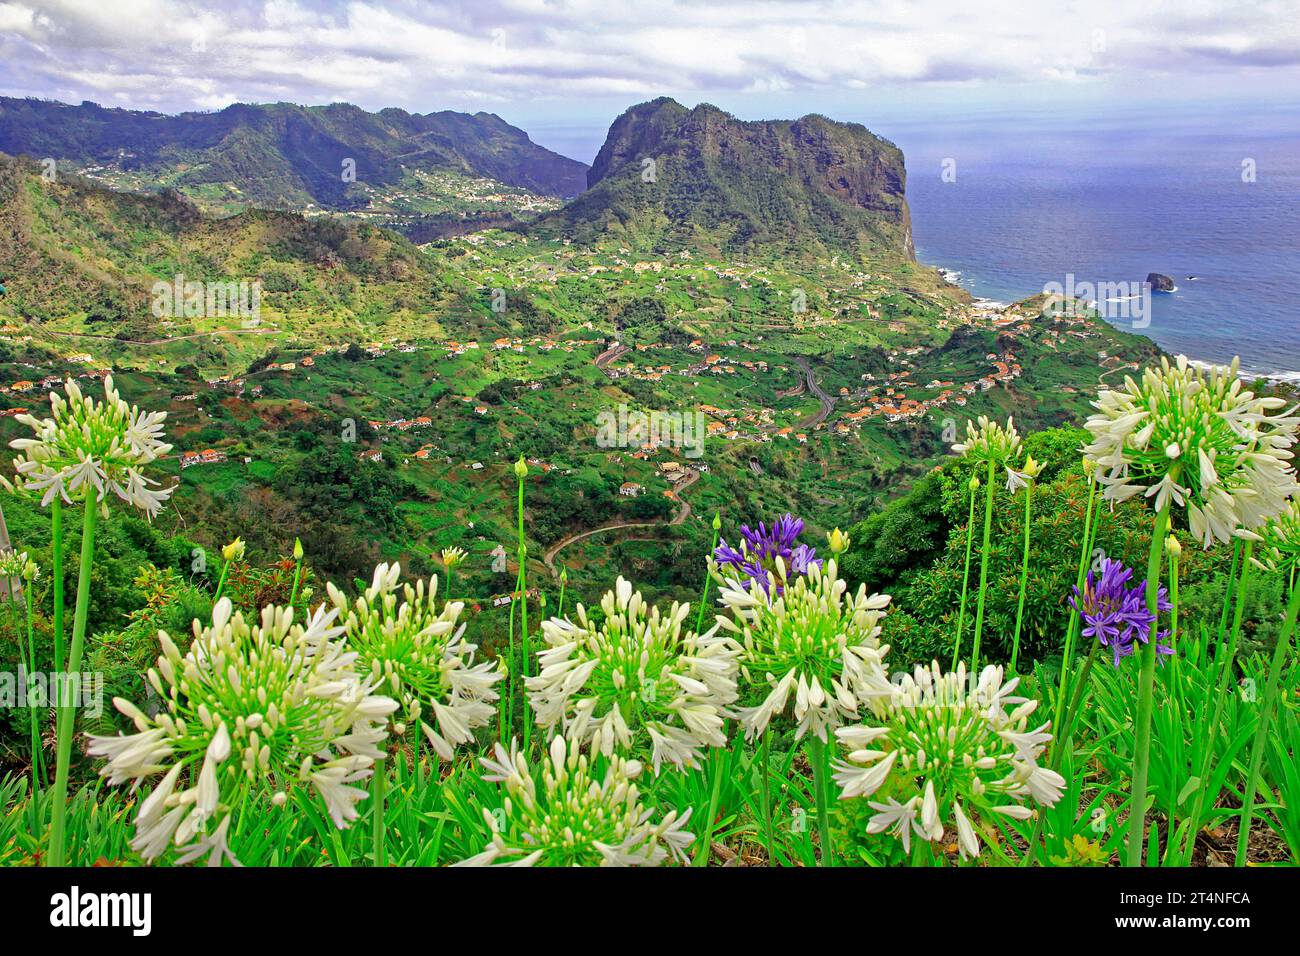 Eagle Rock 590 m, Penha de Aguila, African lilies of the nile (Agapanthus) Porta da Cruz, North side, Madeira Island, Atlantic Ocean, Coast Stock Photo